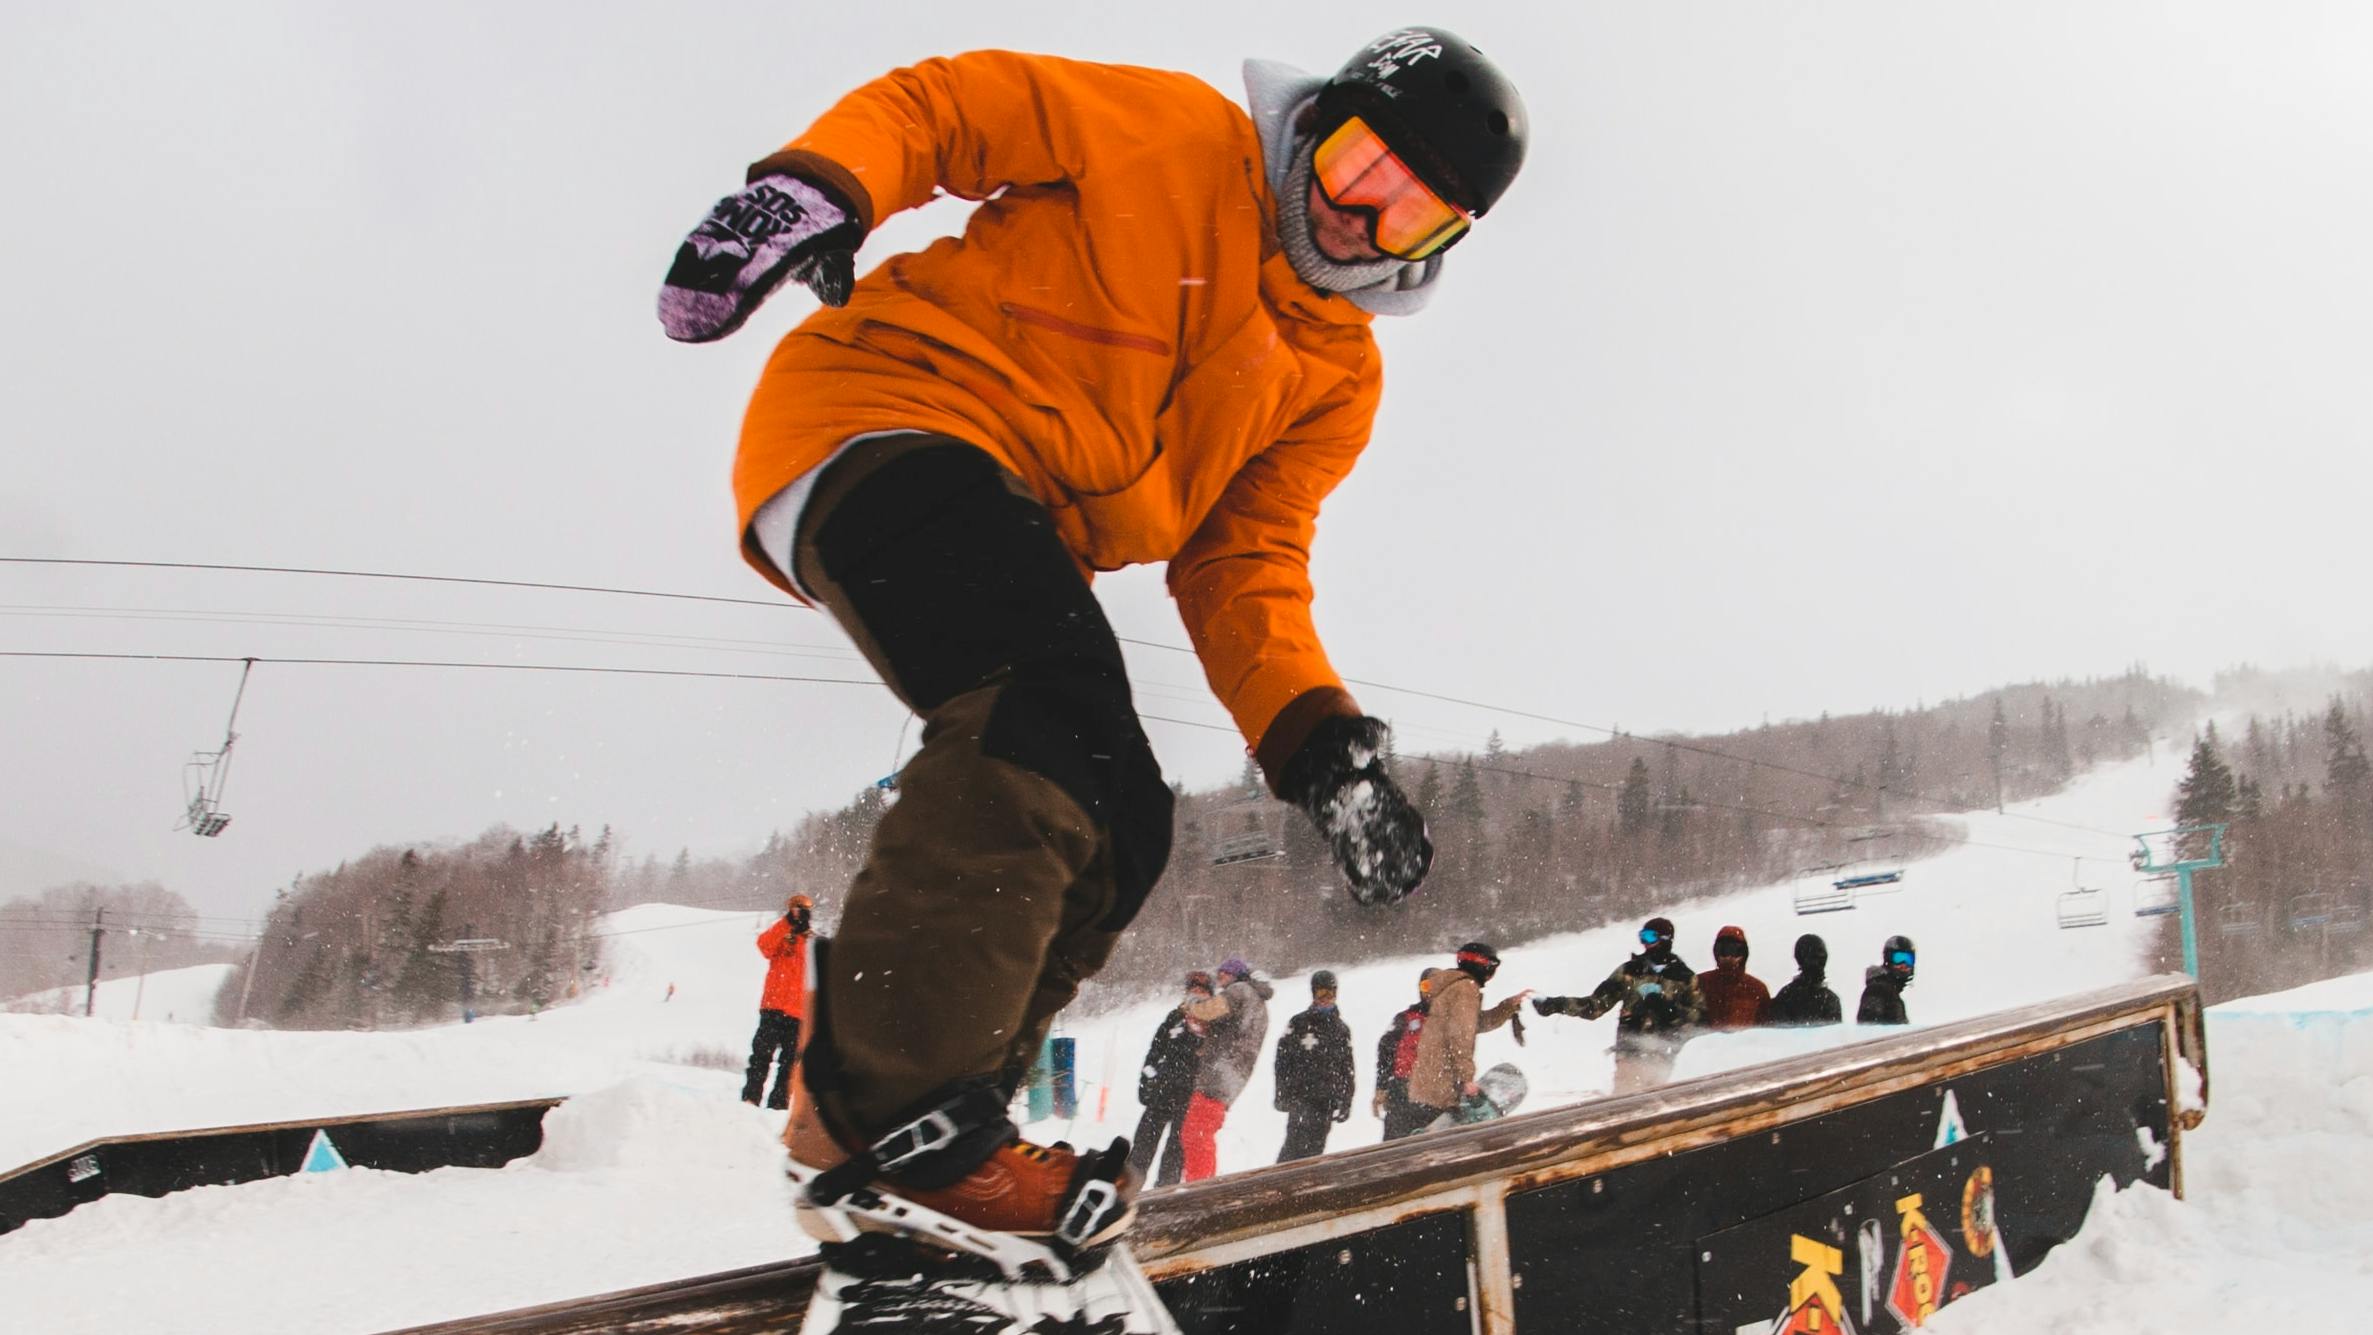 Snowboarder wearing orange jacket slides across a rail on his snowboard in the terrain park.